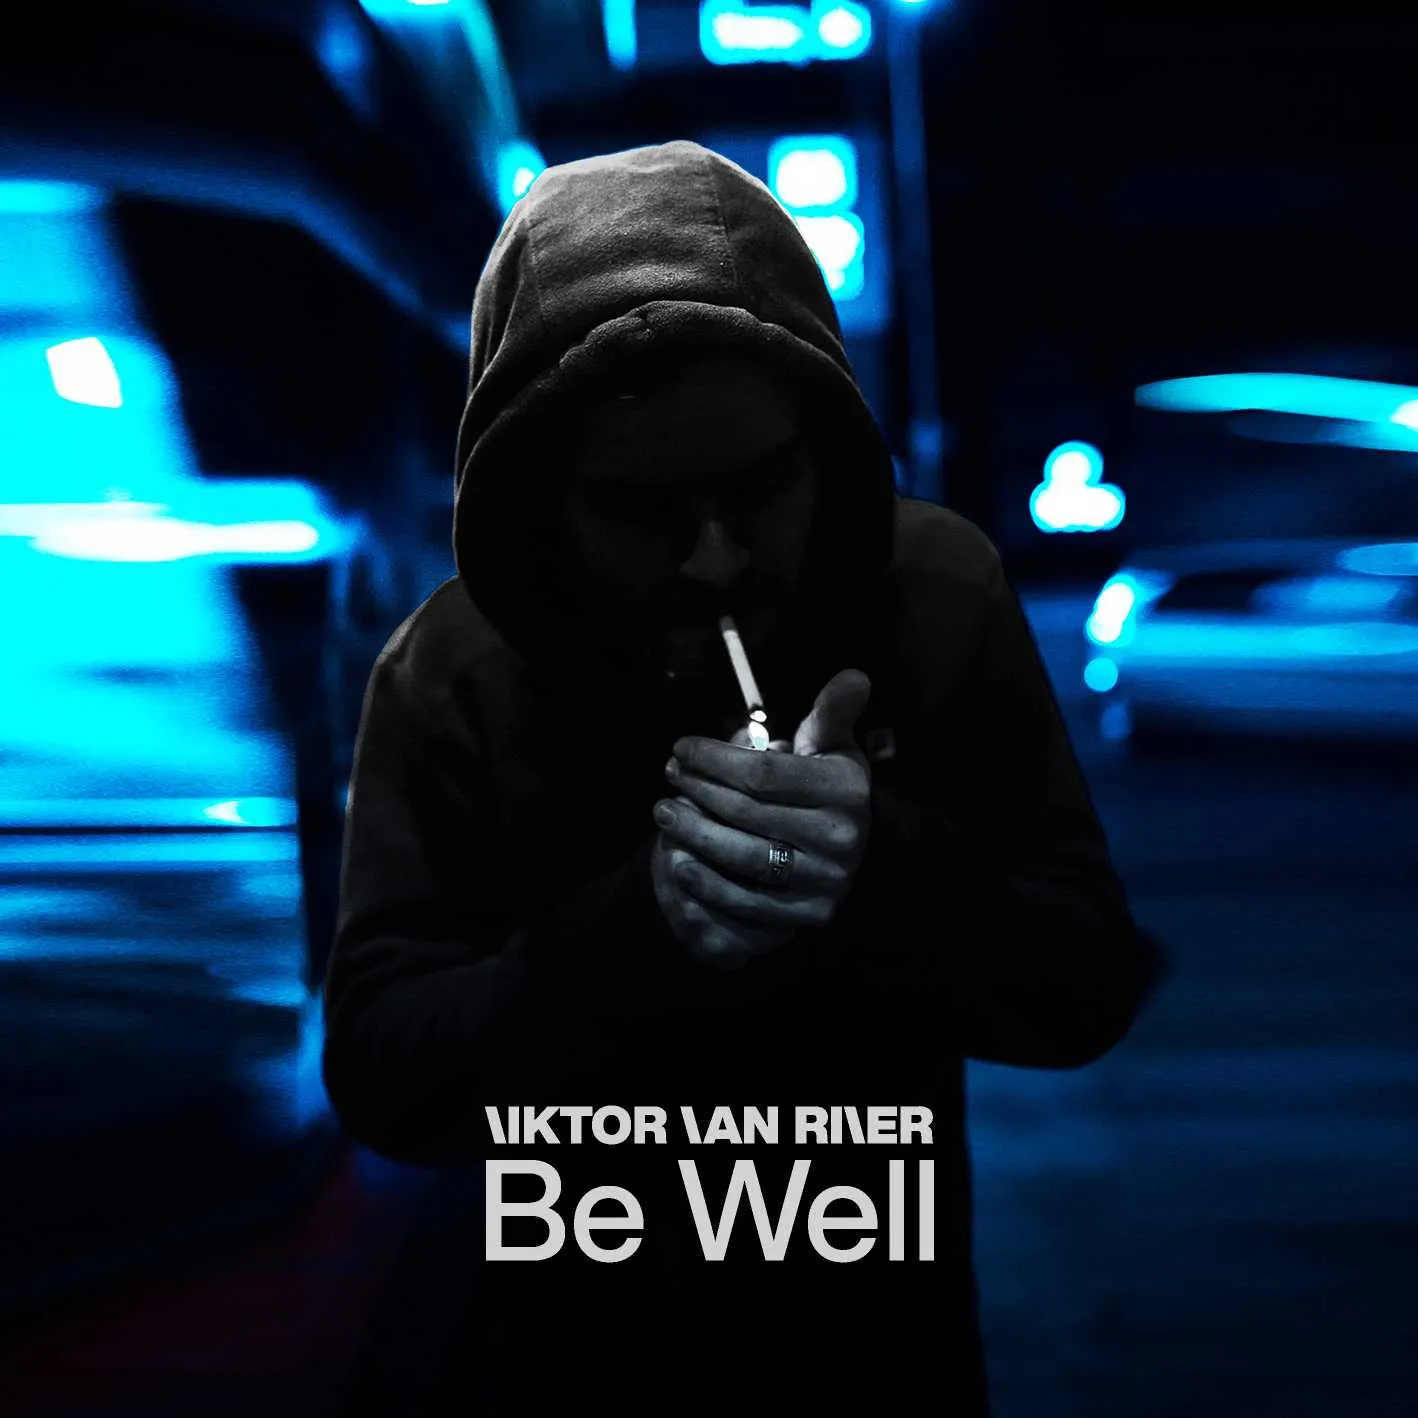 Album cover for “Be Well” by Viktor Van River